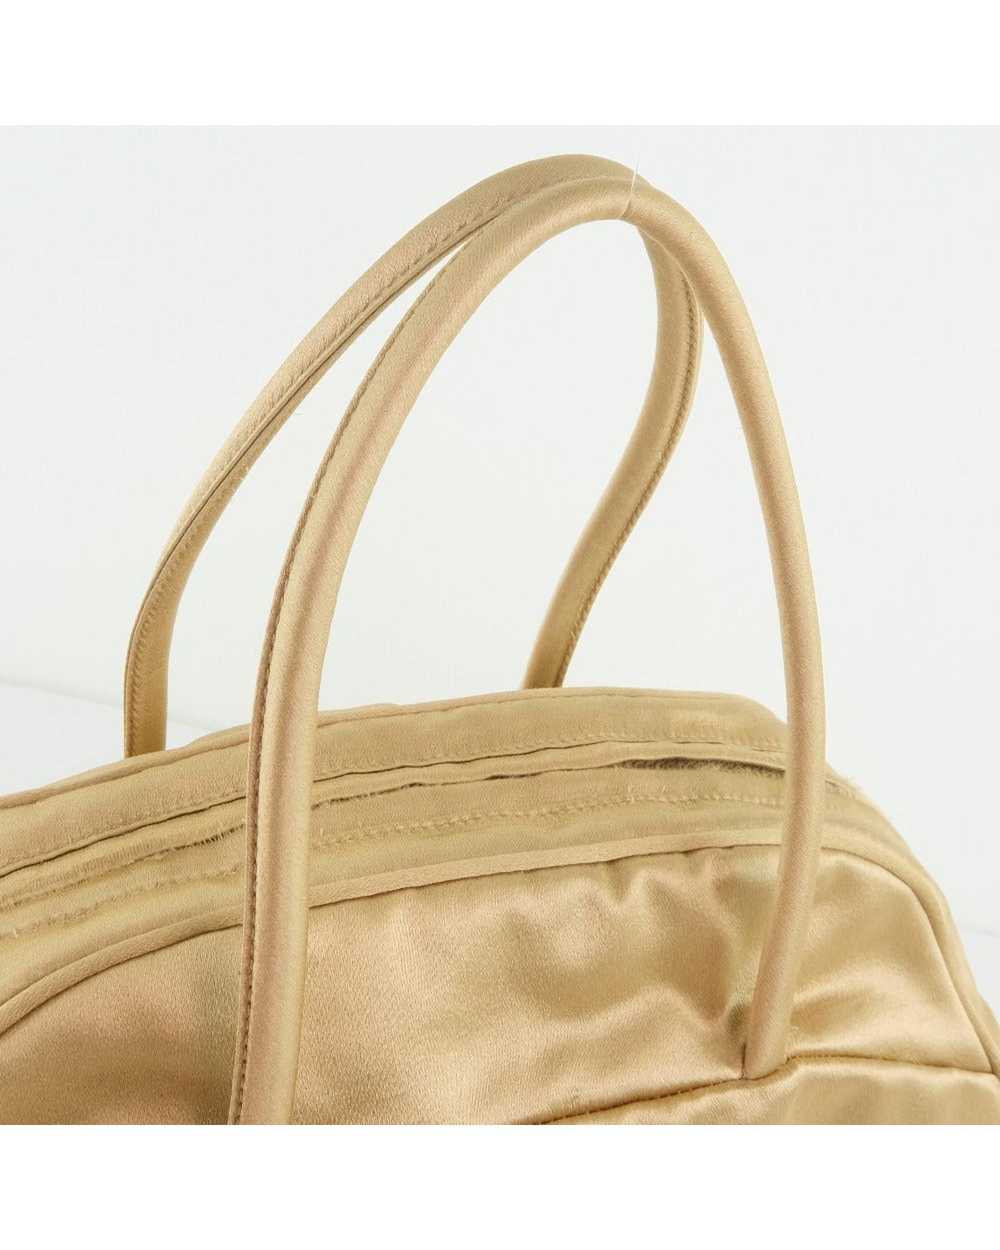 Prada Beige Synthetic Prada Handbag - image 4